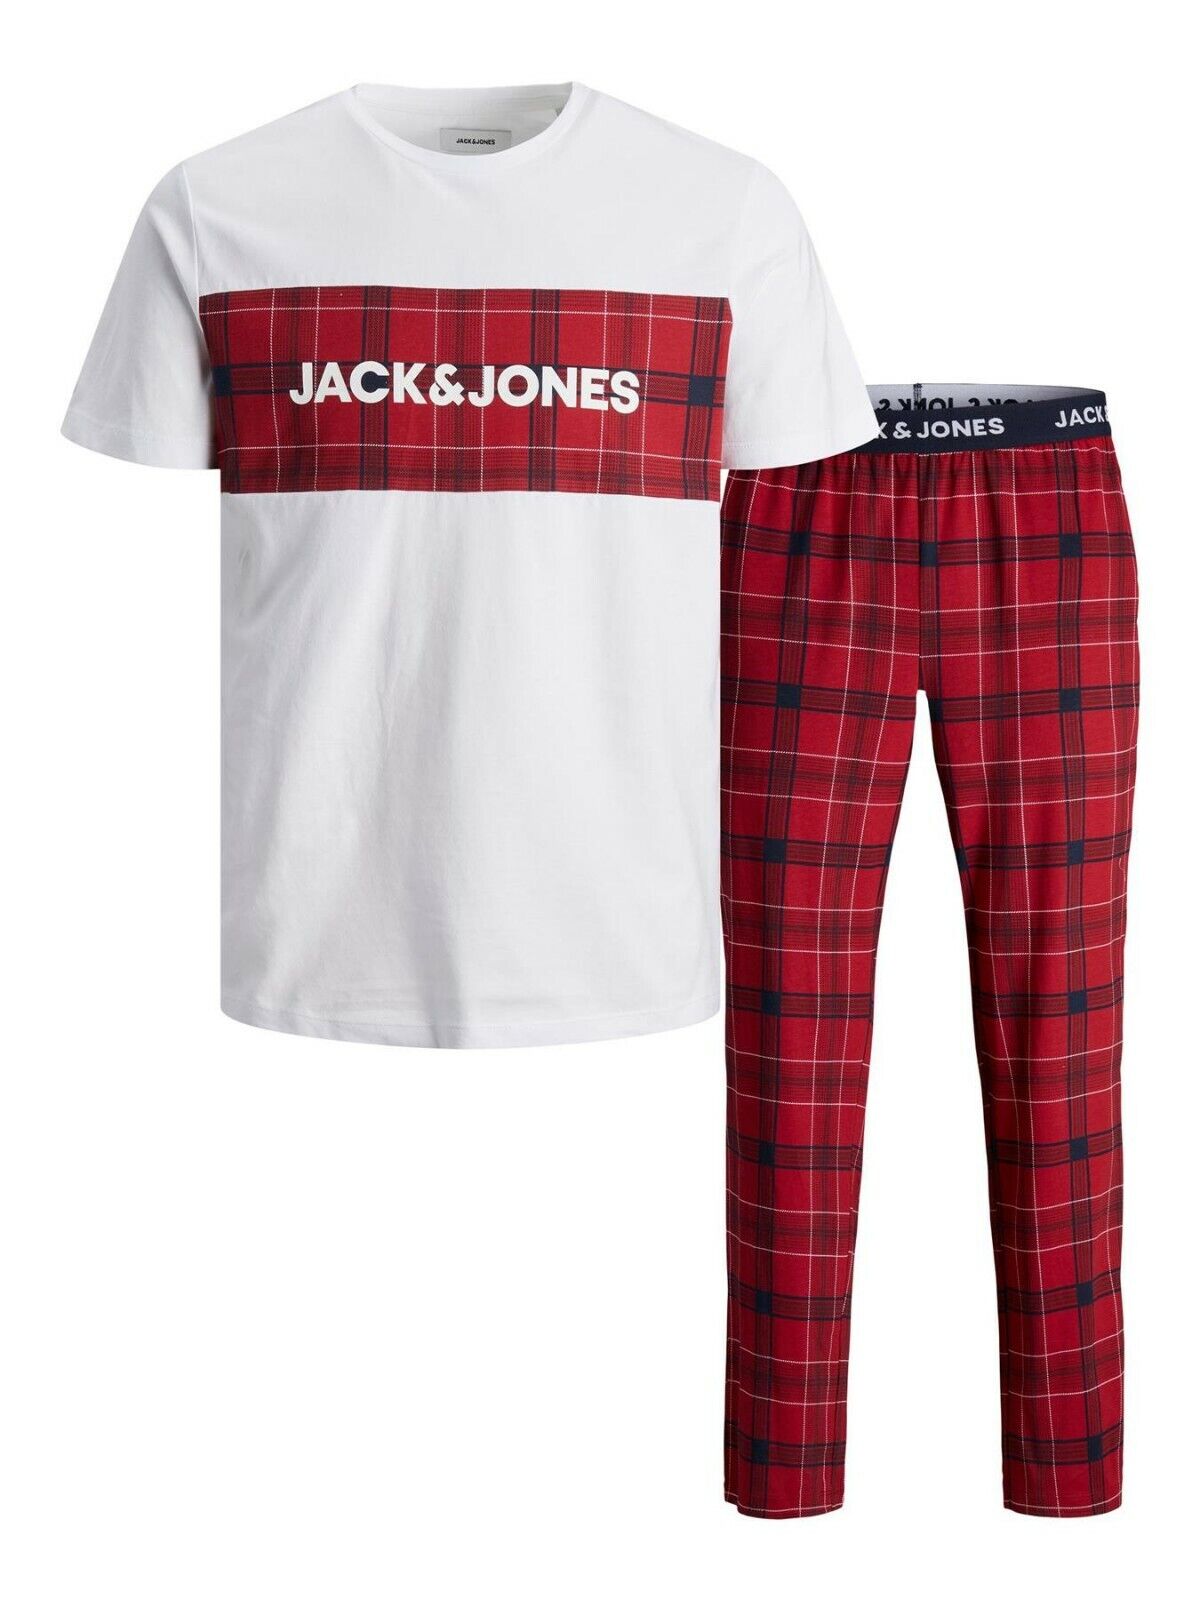 Mens Pyjamas Jack Jones Loungewear Set Night Suit PJ Sleepwear Top Bottom S-2XL